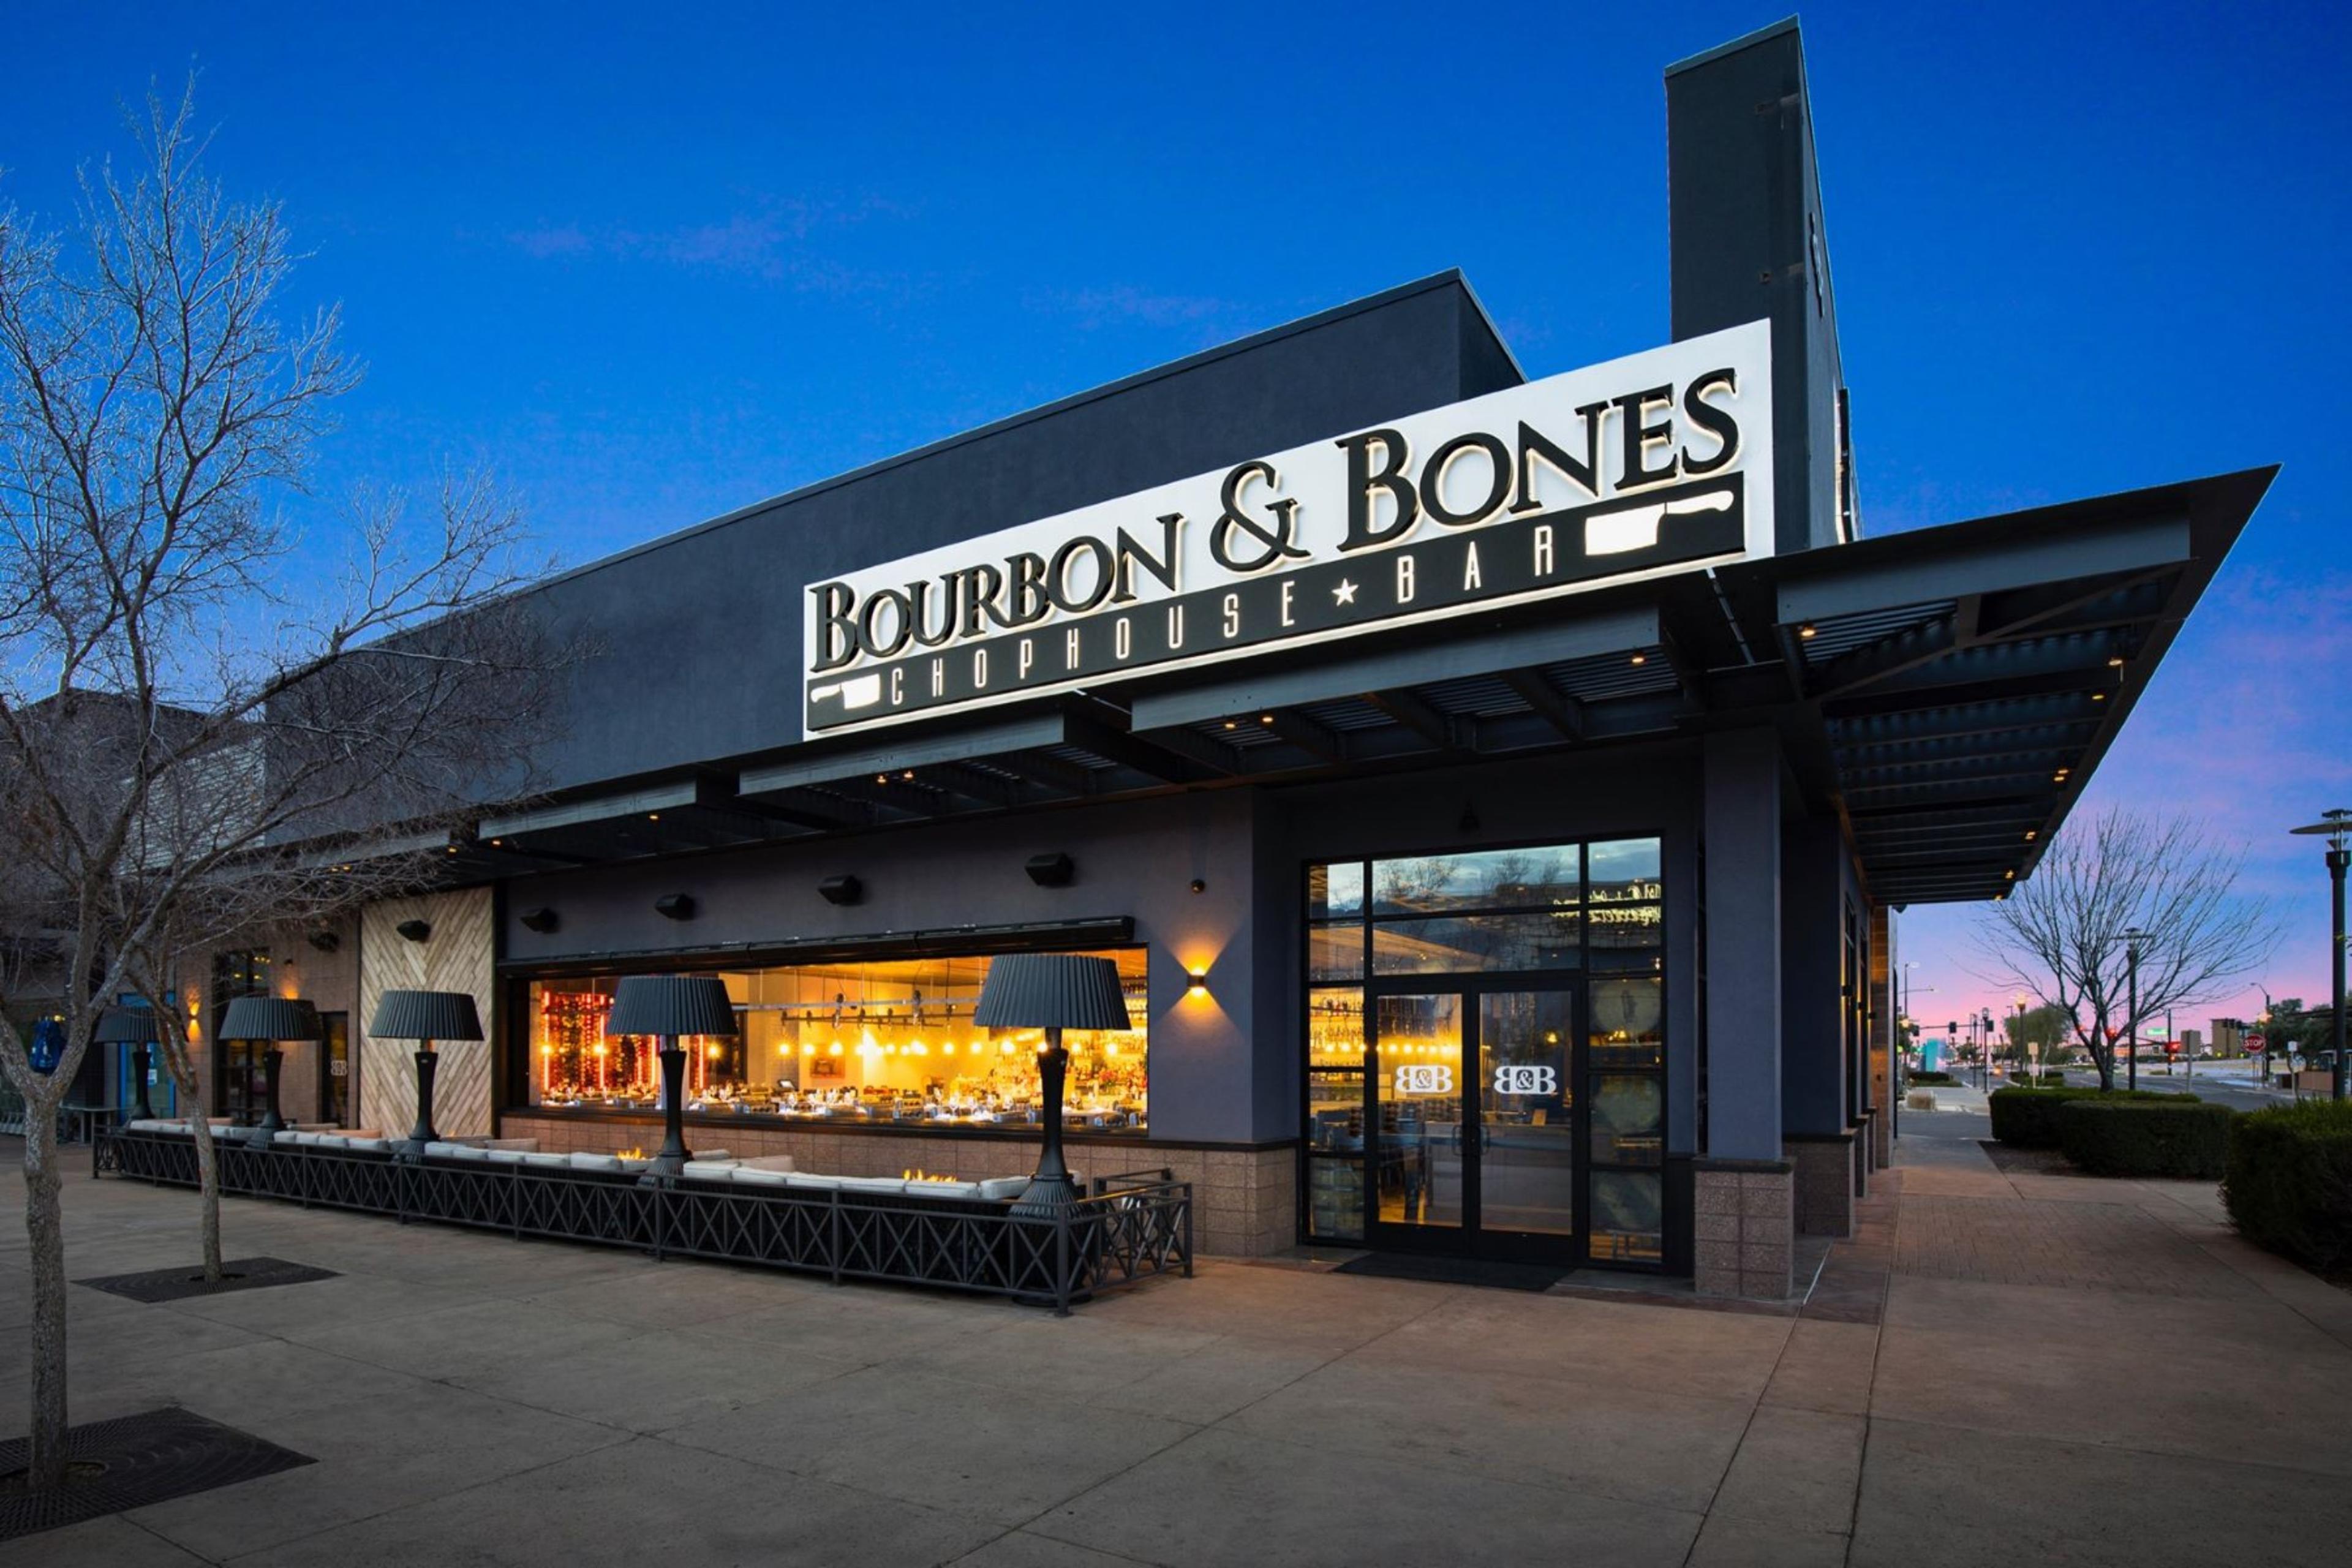 Bourbon & Bones Chophouse and Bar - Old Town Scottsdale